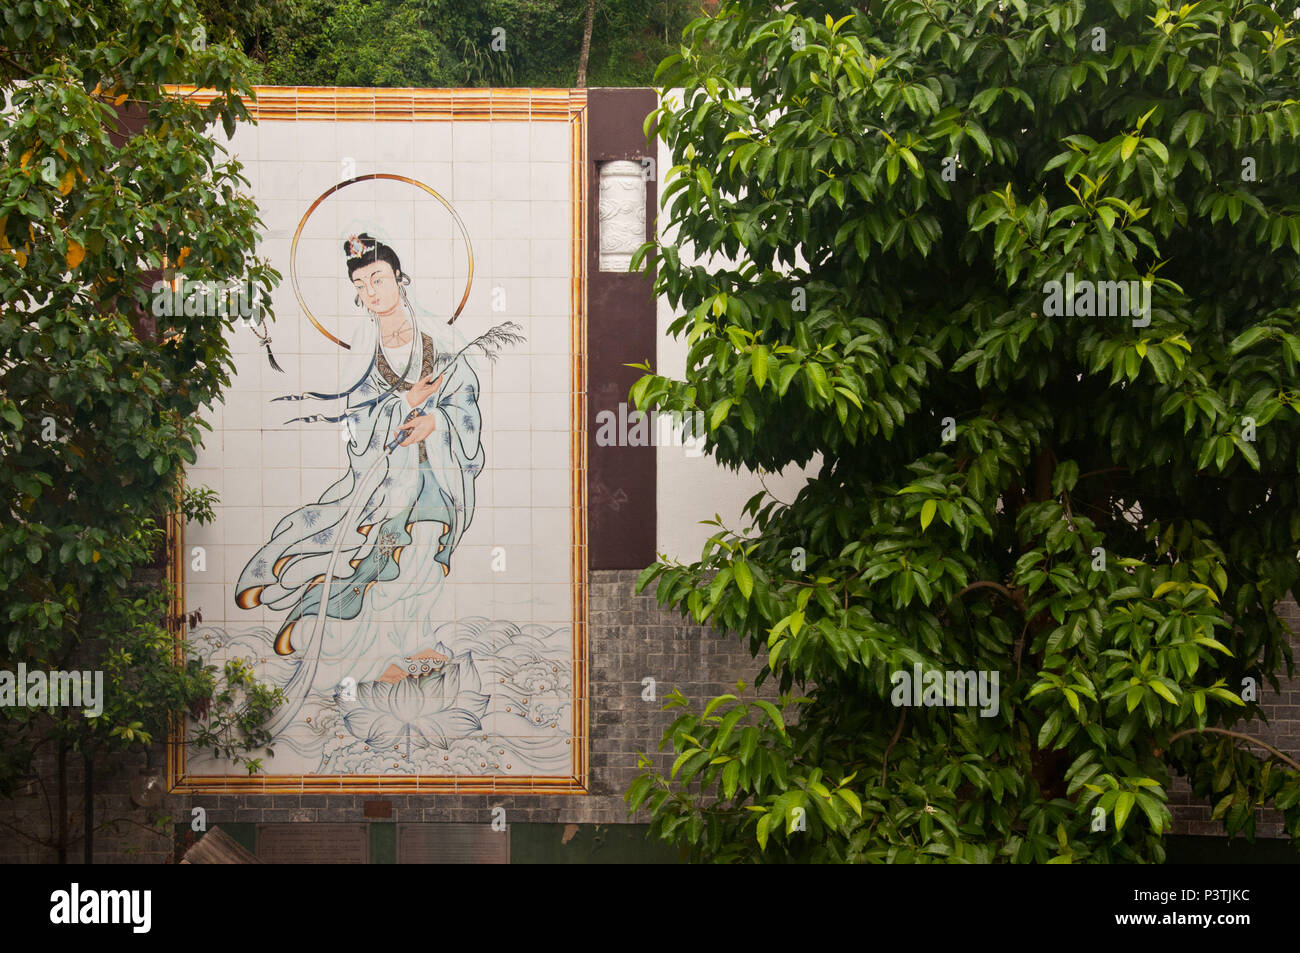 COTIA, SP - 21.02.2016: TEMPLO ZU LAI - Painel de Azulejos keine jardim Templo budista tun. (Foto: Daniela Maria/Fotoarena) Stockfoto